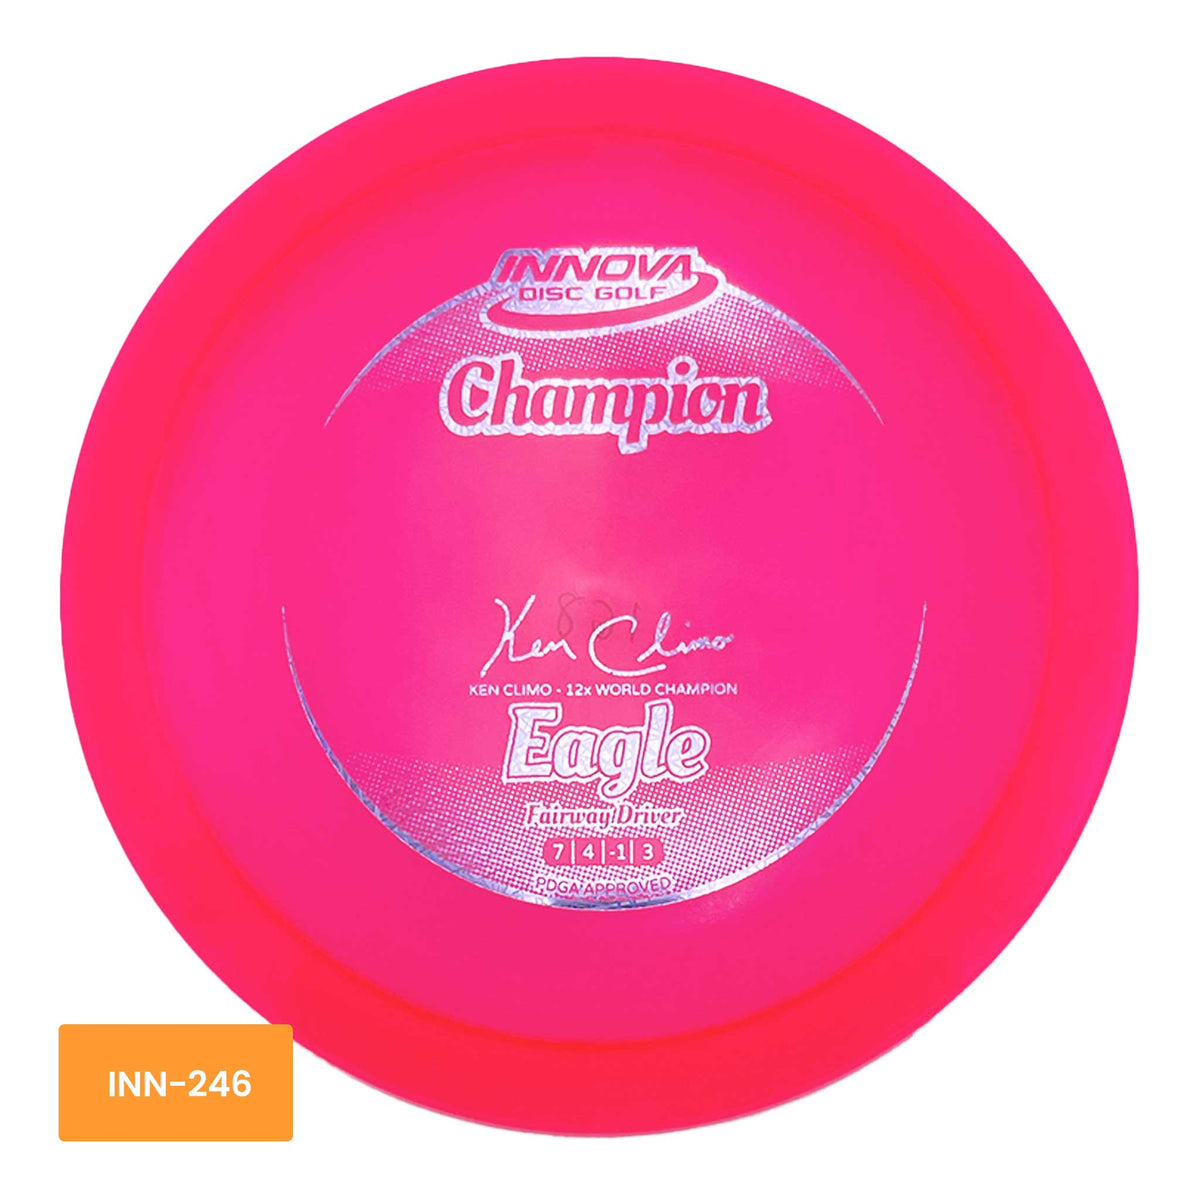 Innova Disc Golf Champion Eagle fairway driver - Pink